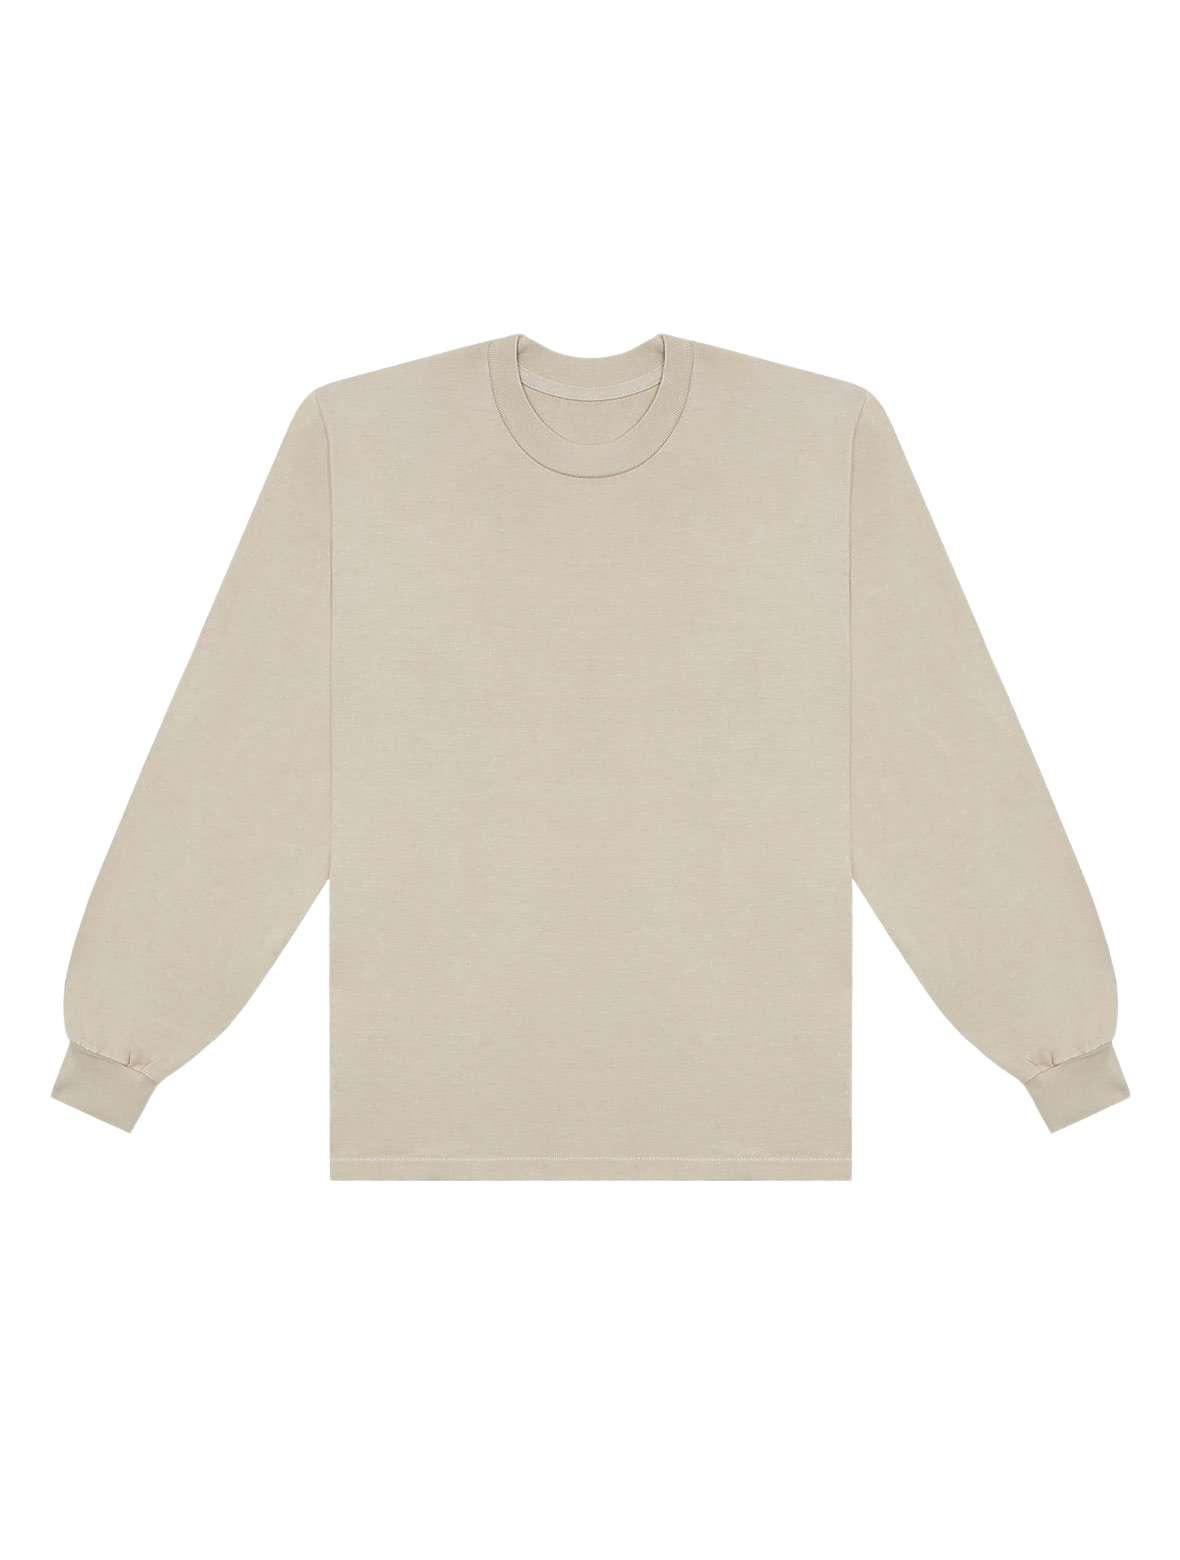 SSUPLY - Original Classic Sweatshirt - Natural